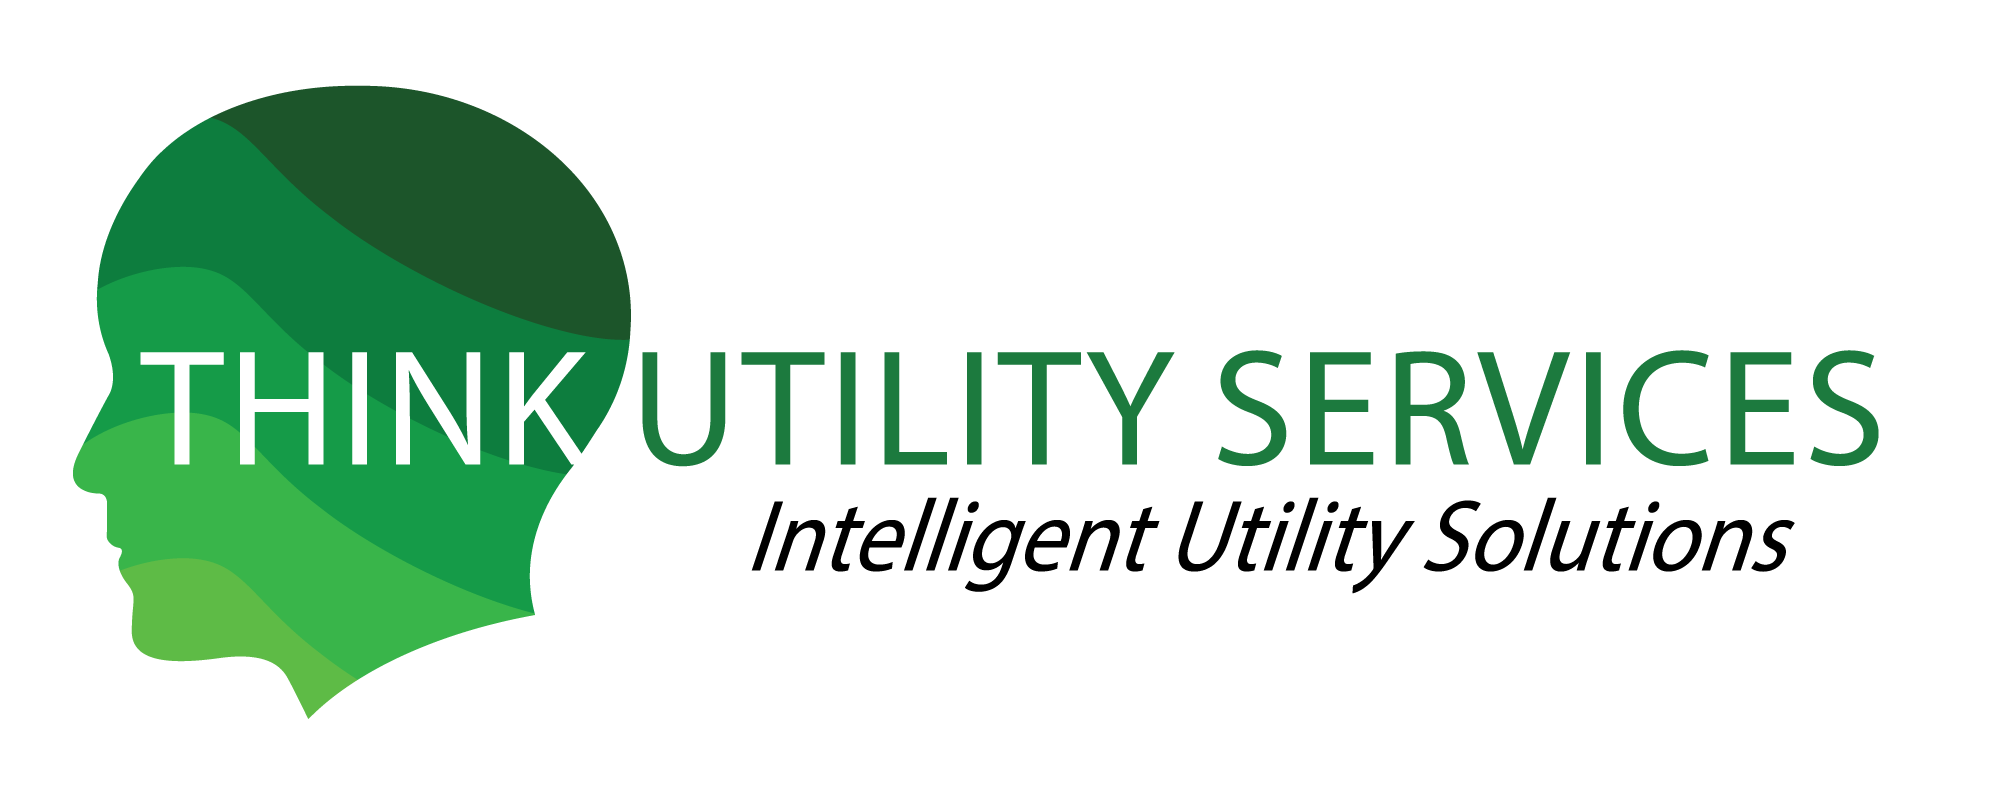 Think-Utility-Services-FullV2